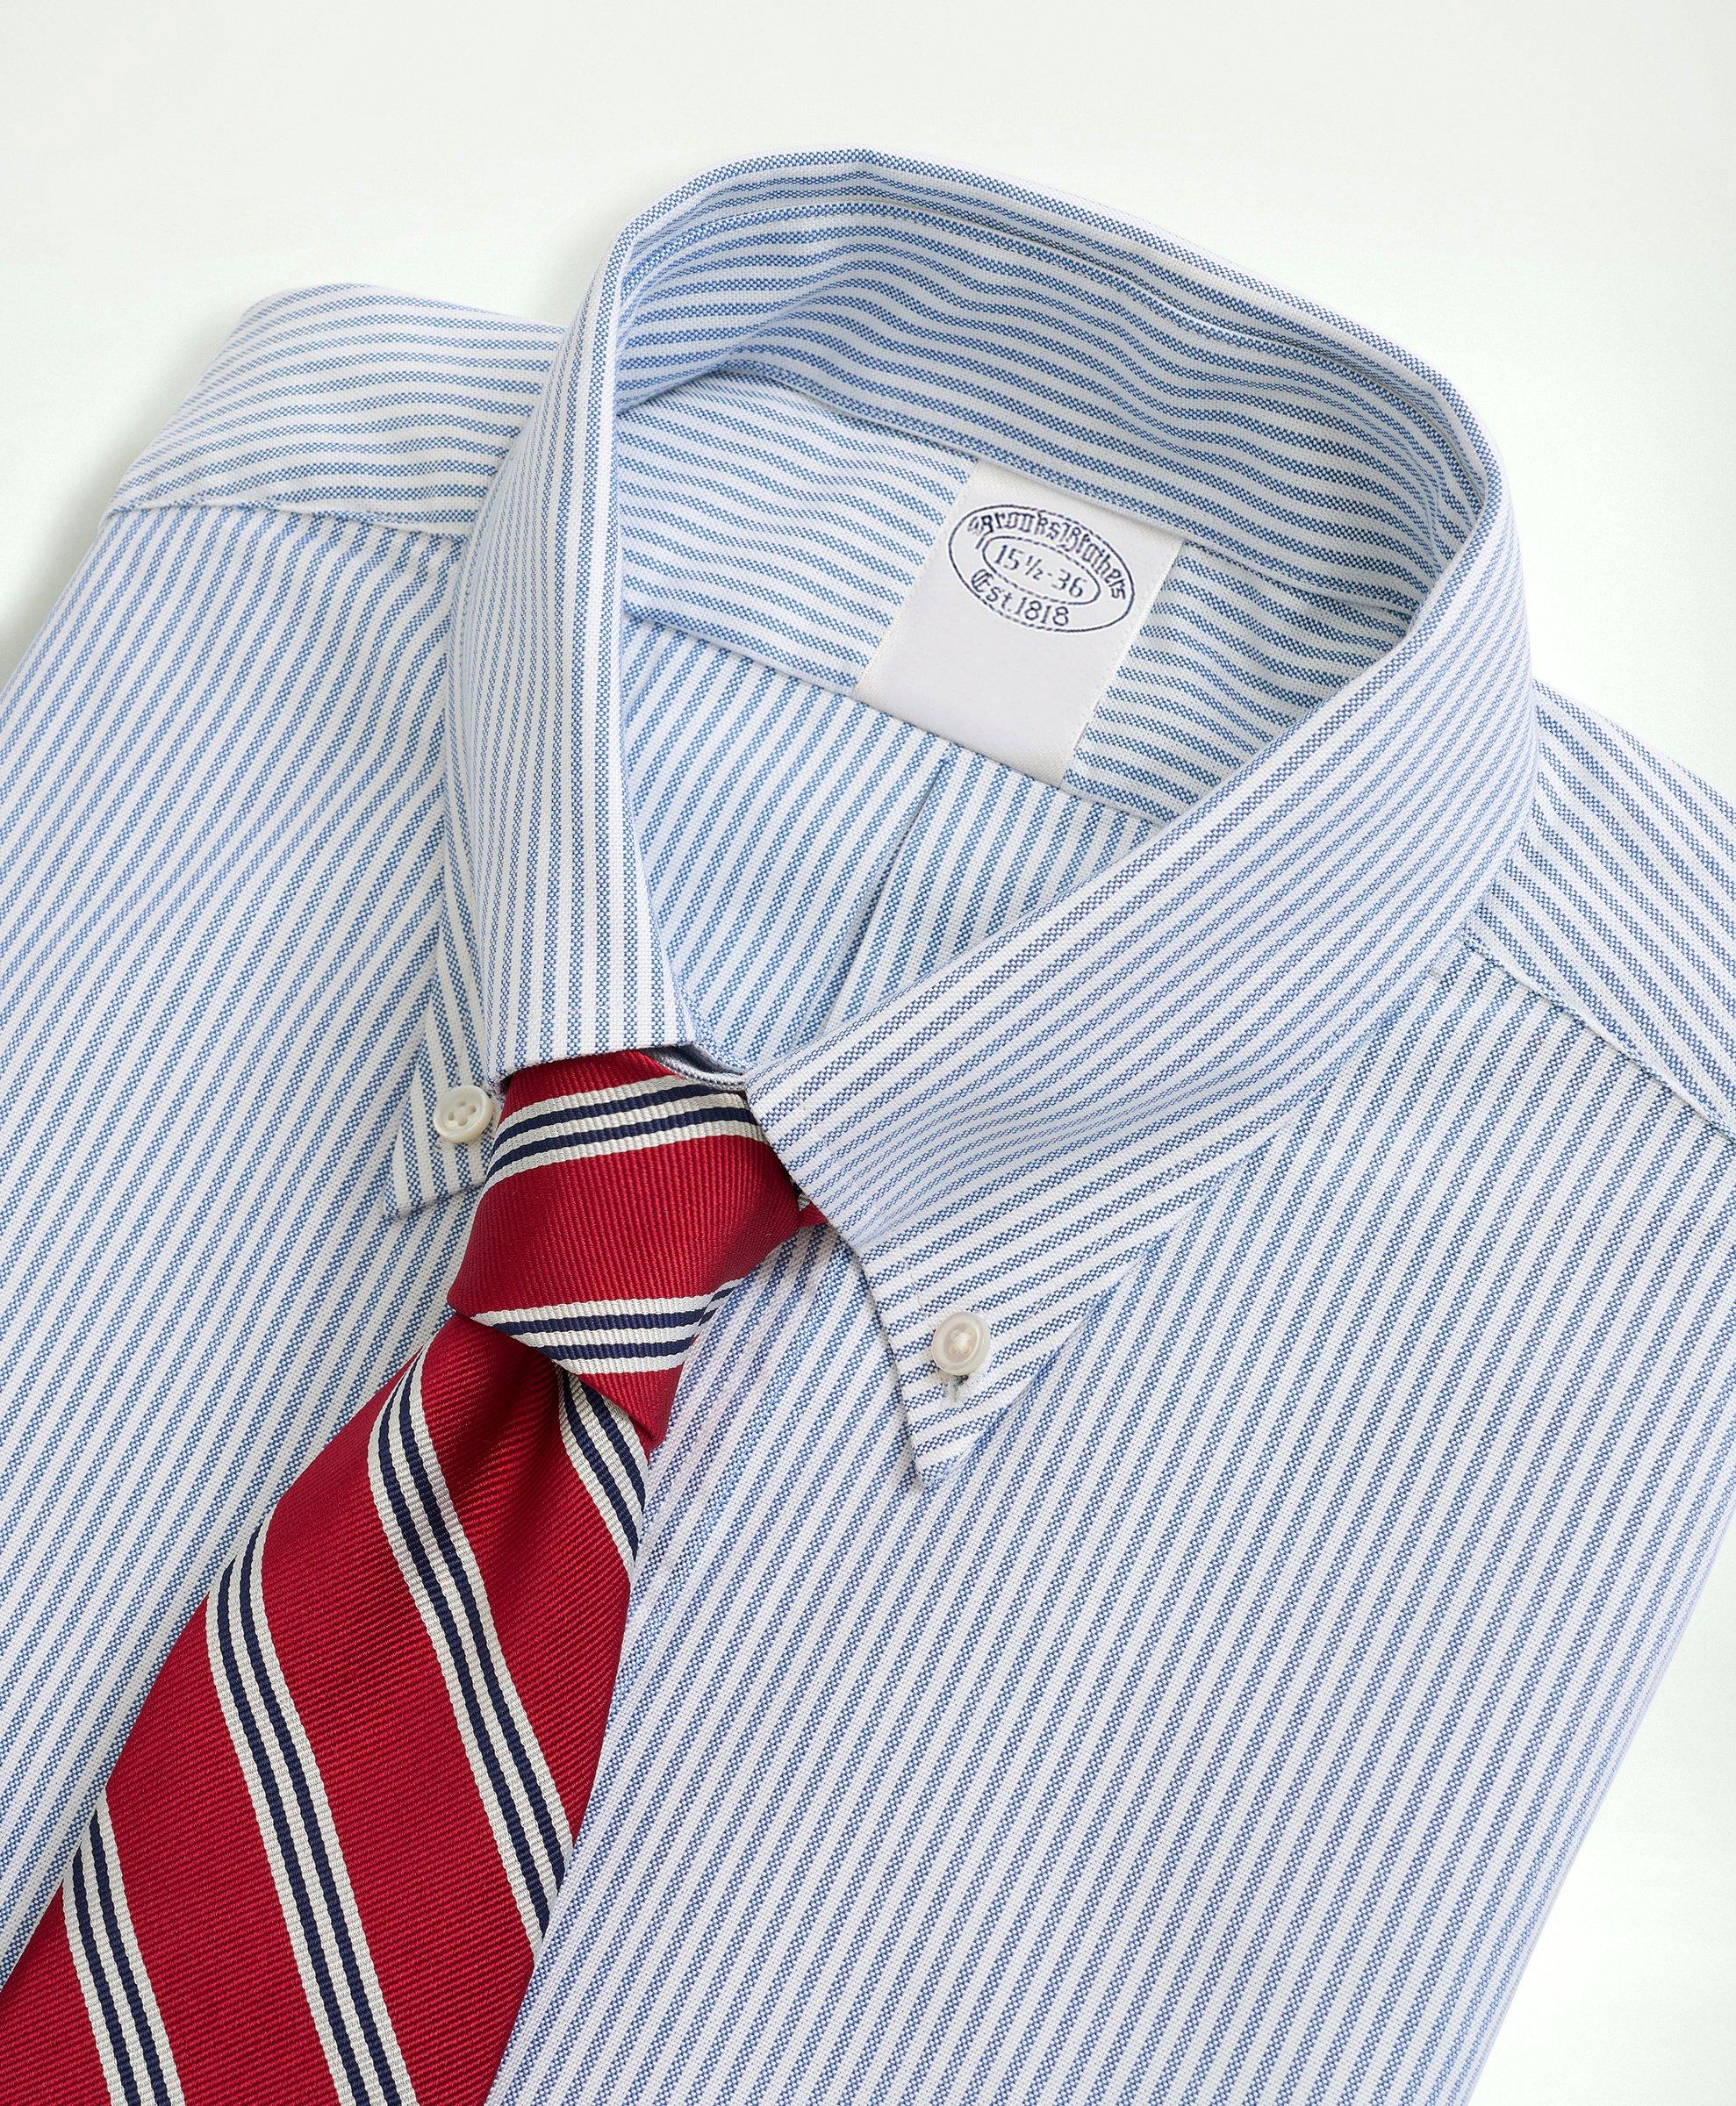 American-Made Oxford Cloth Button-Down Dress Shirt